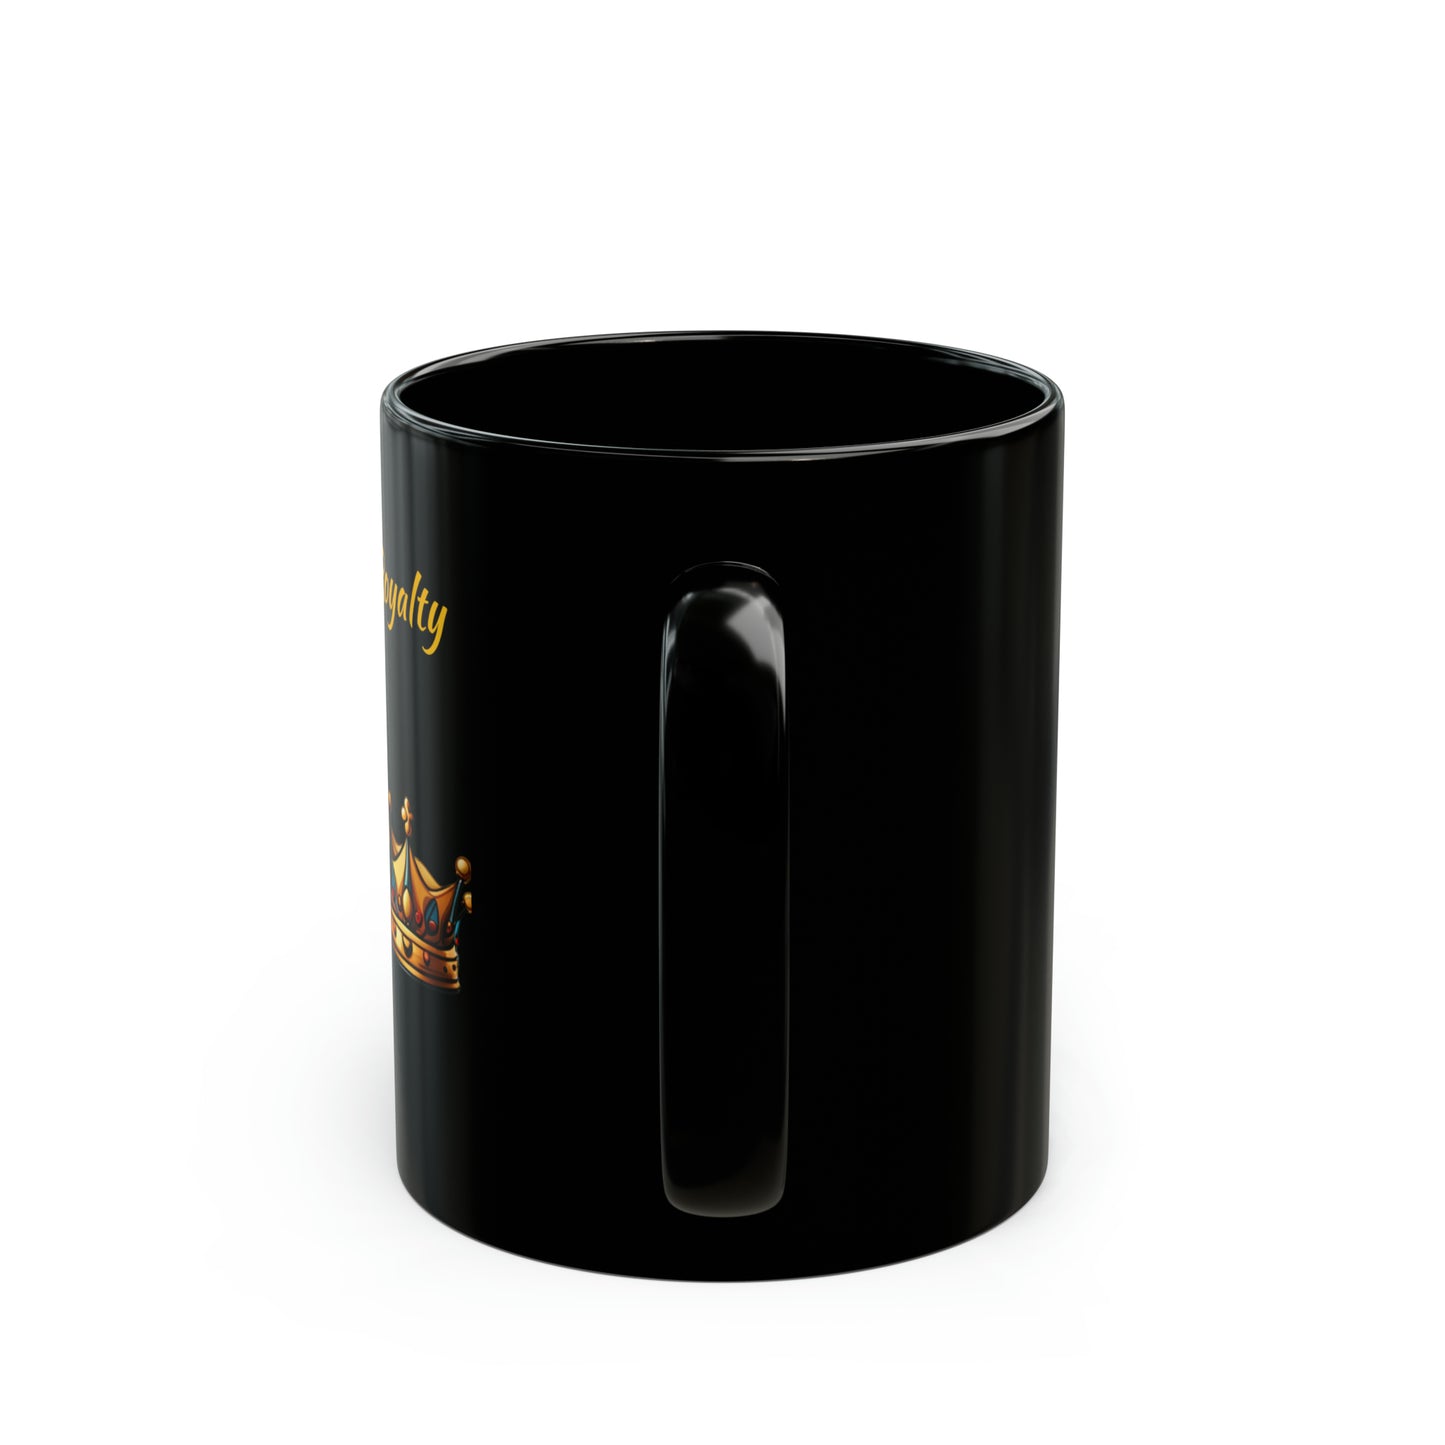 Royalty-Black Mug (11oz)